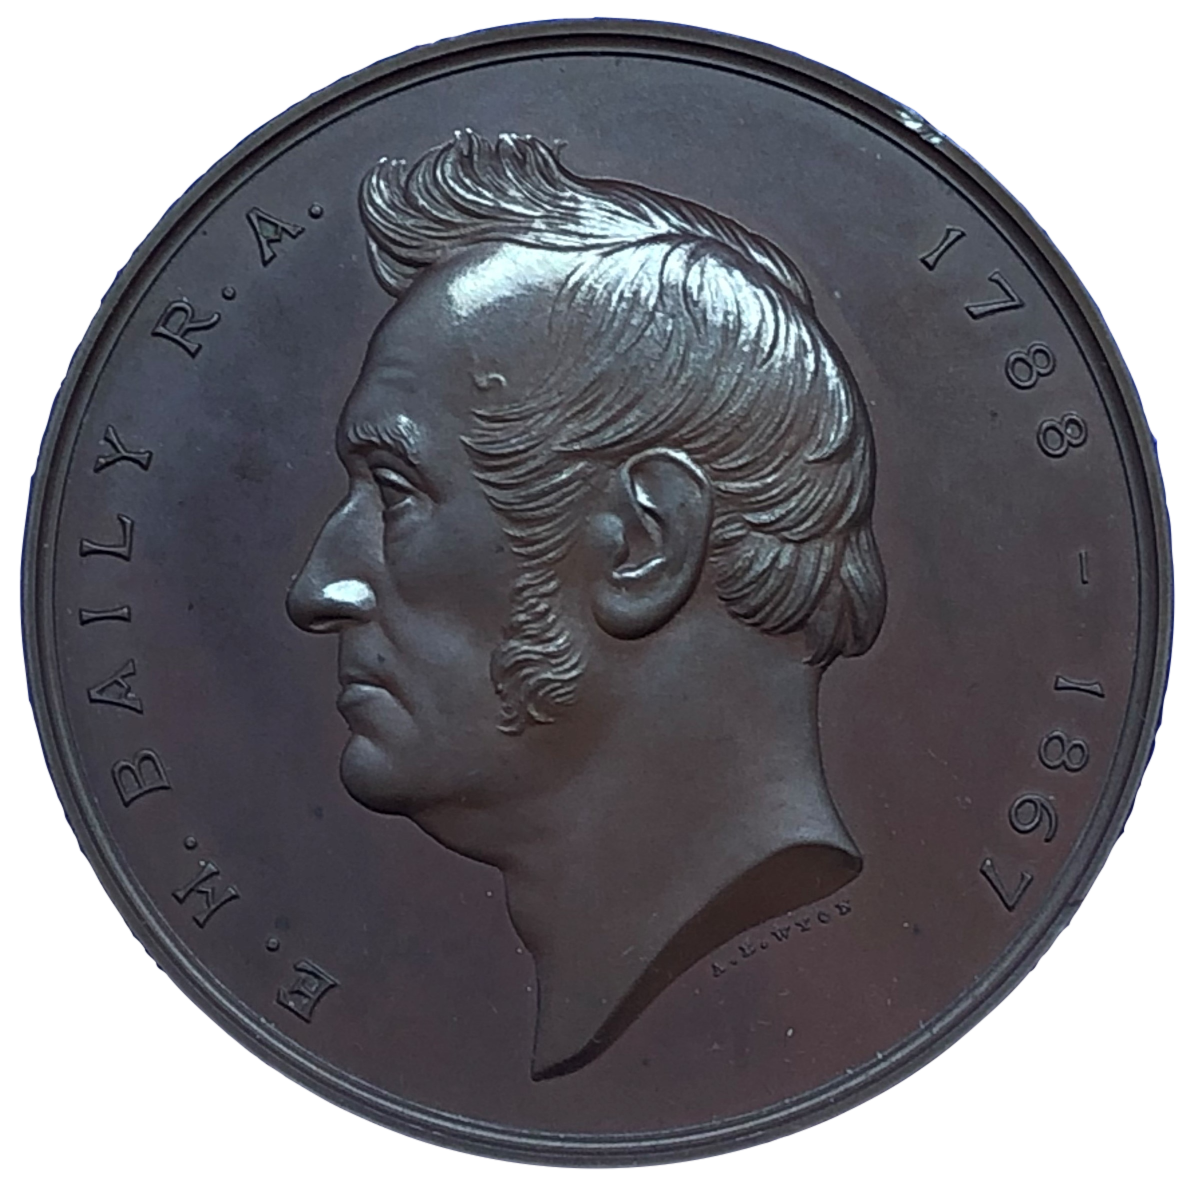 1882 Edward Baily, Sculptor Historical Medallion by A B Wyon Obverse